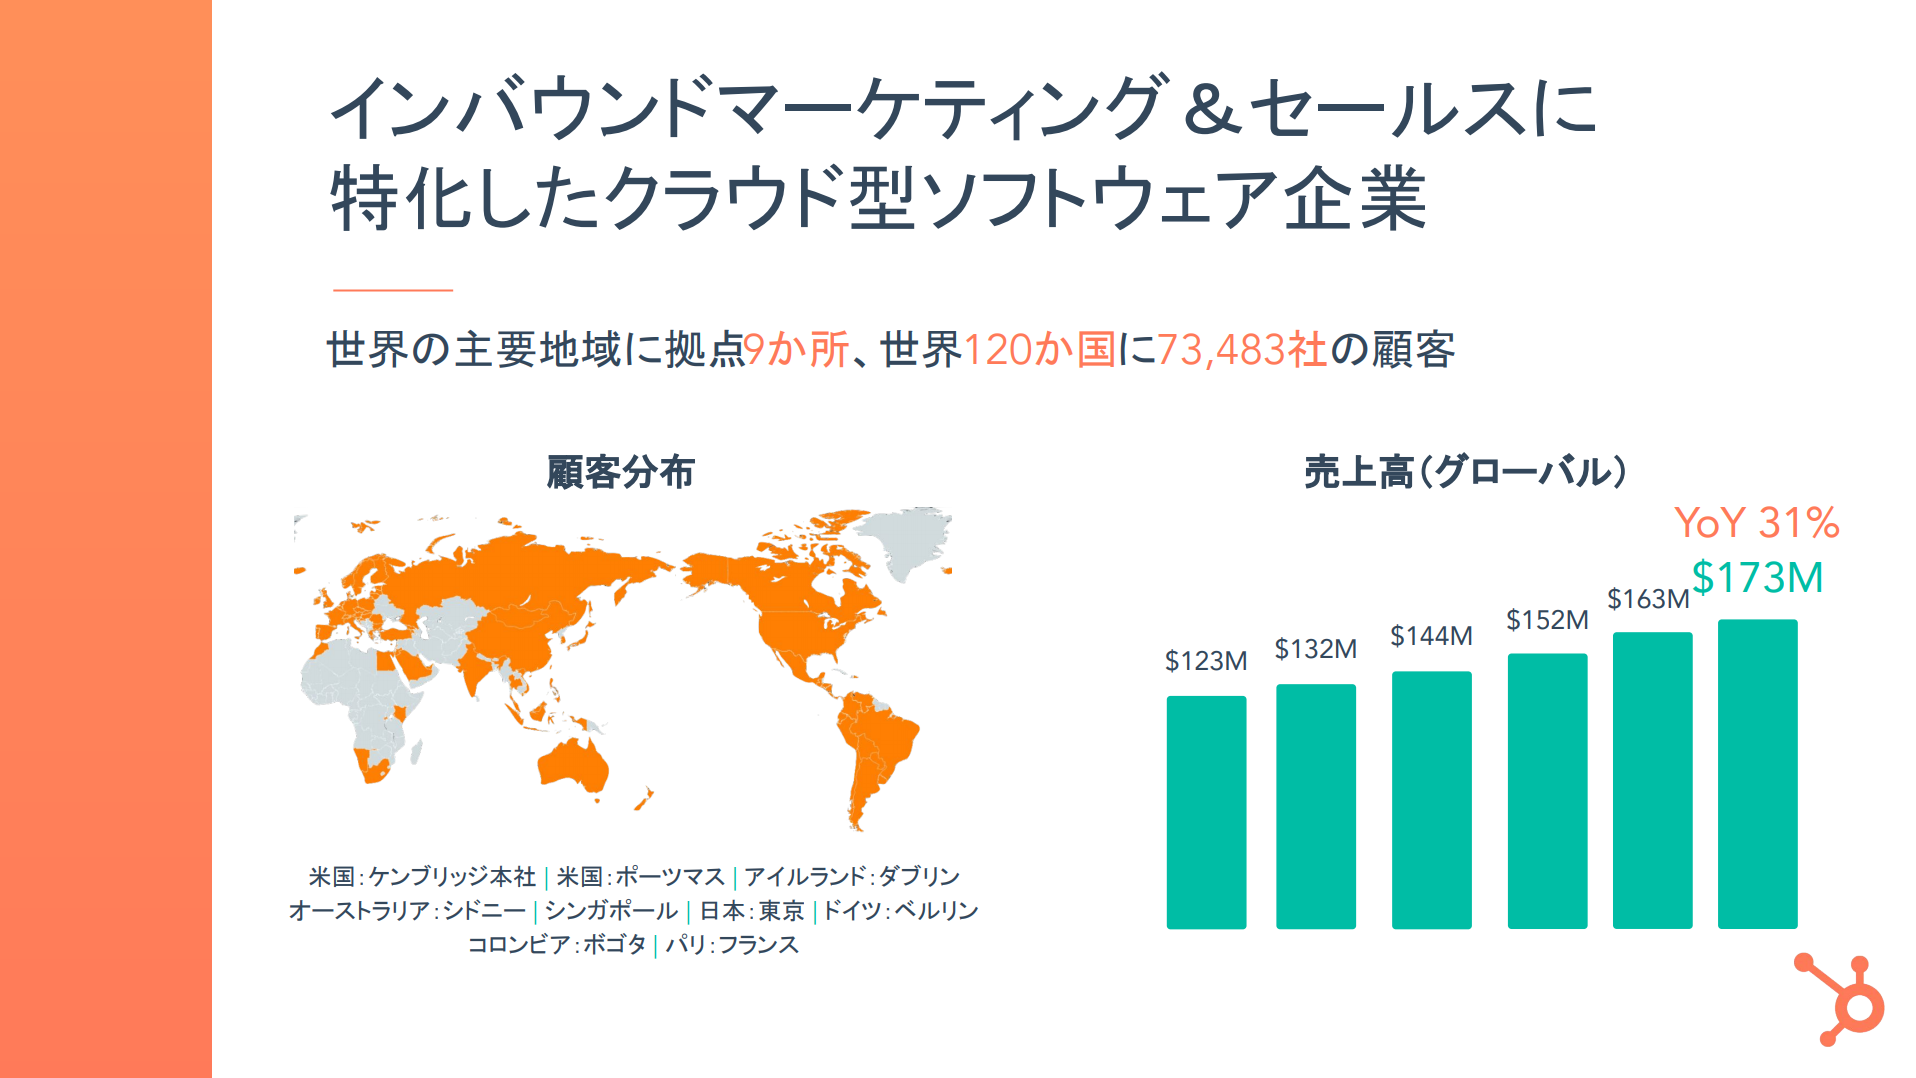 HubSpot Japan_overview_2020  last update_ 20200312  pdf